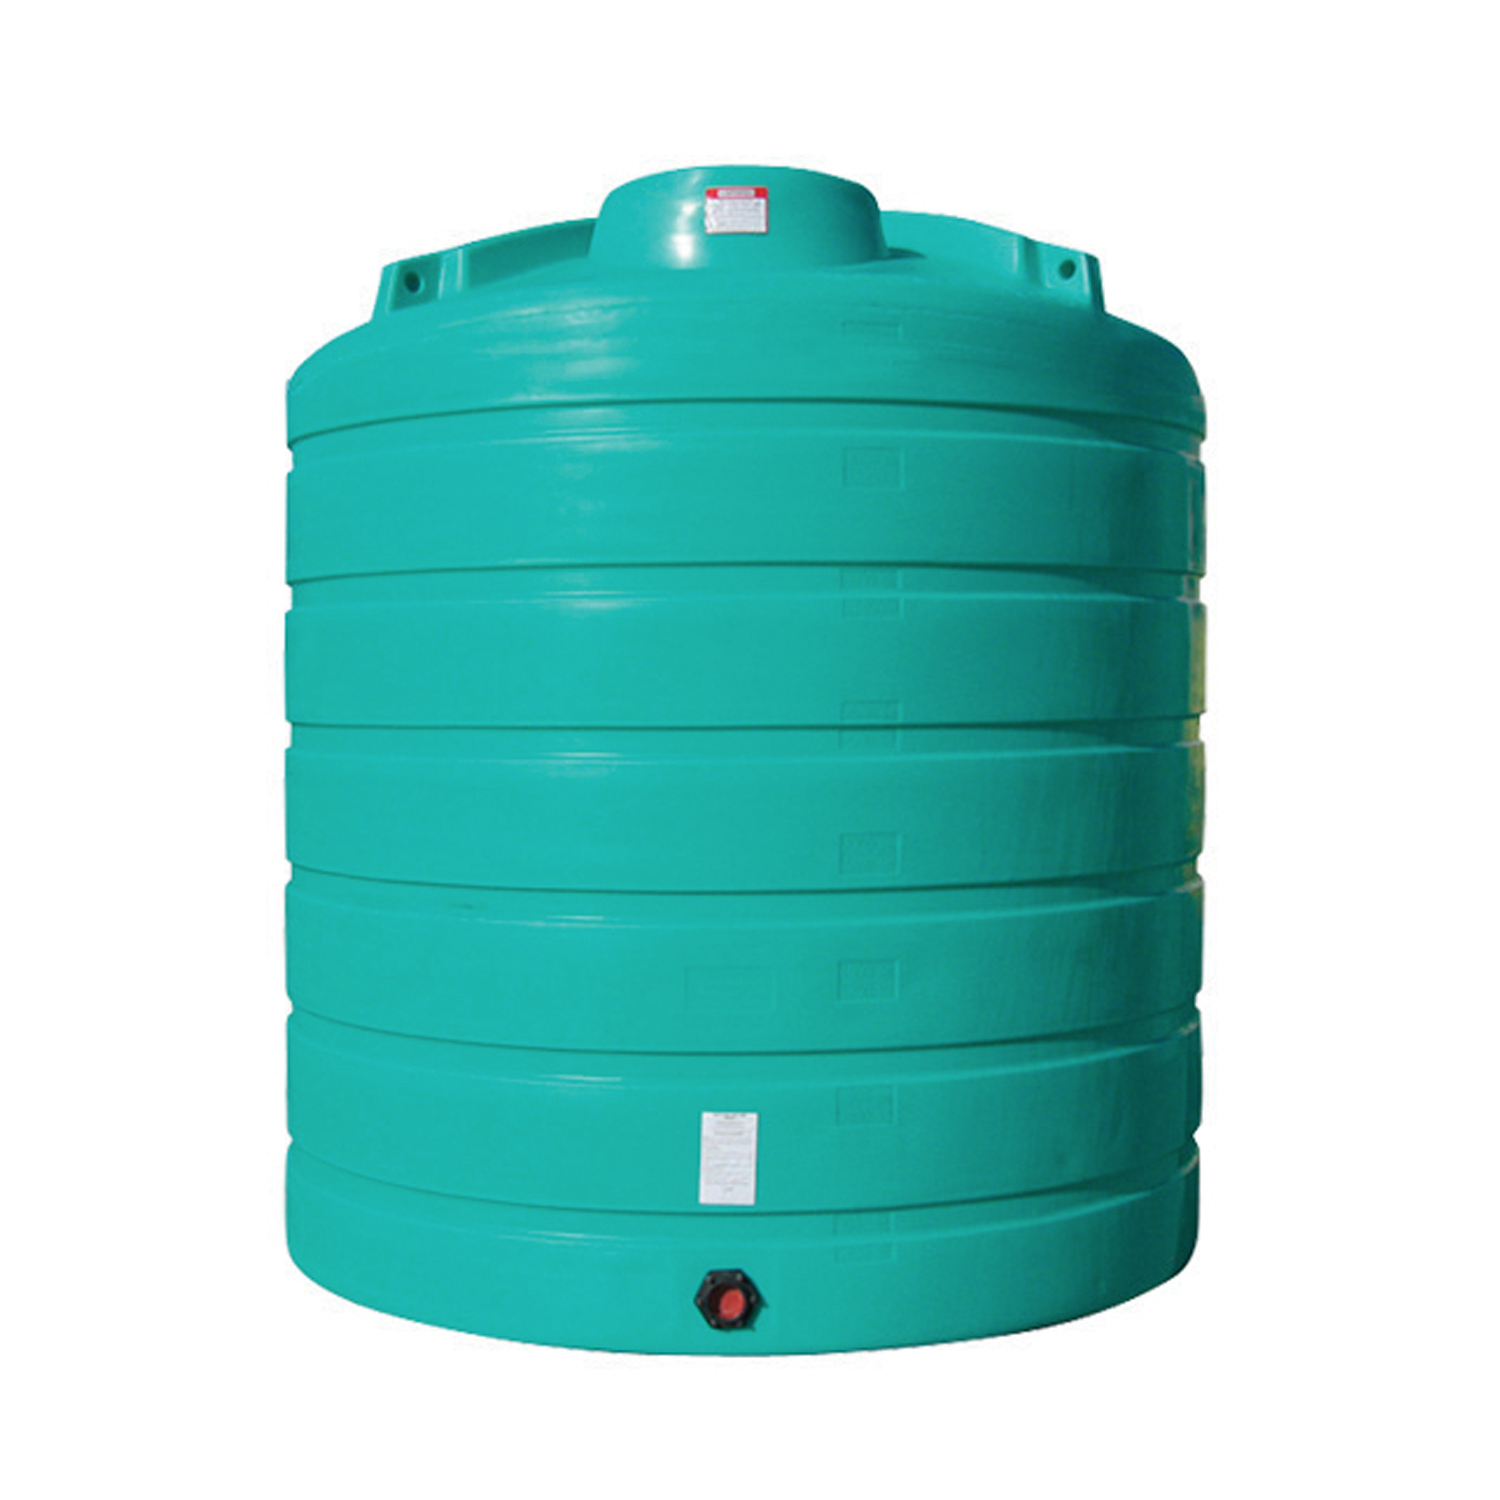 Enduraplas 3,100 Gallon Flat Bottom Storage Tank